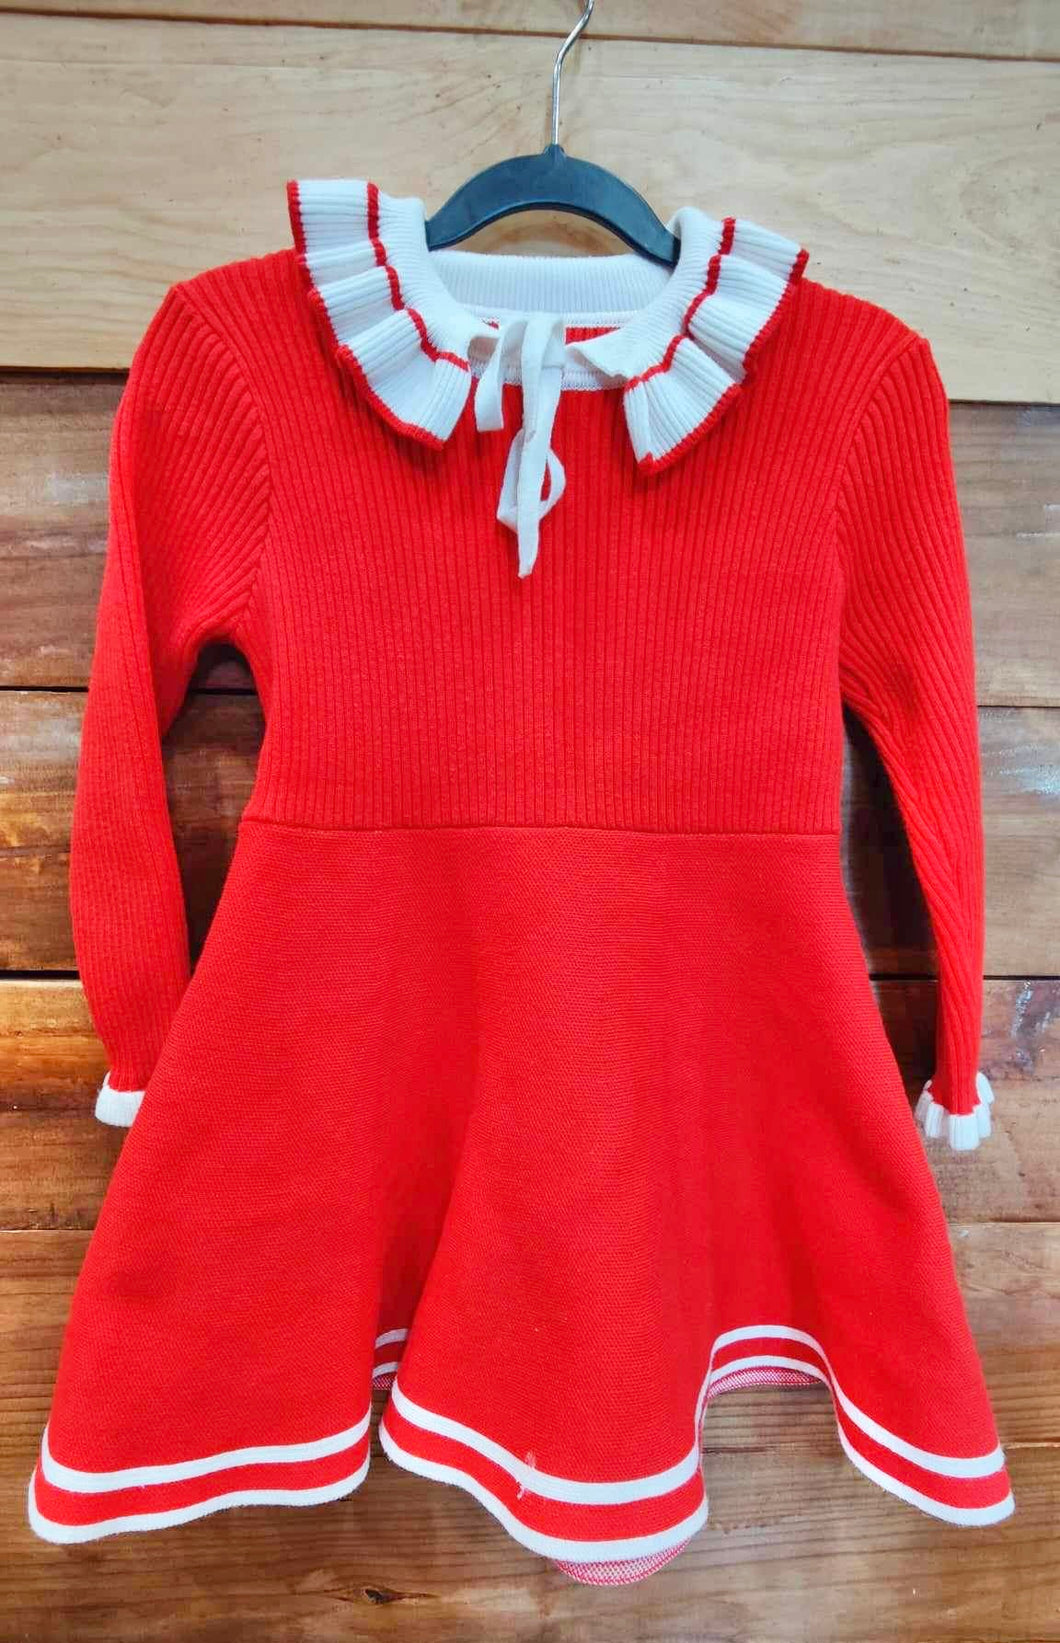 Red Knit Dress Size 6-7